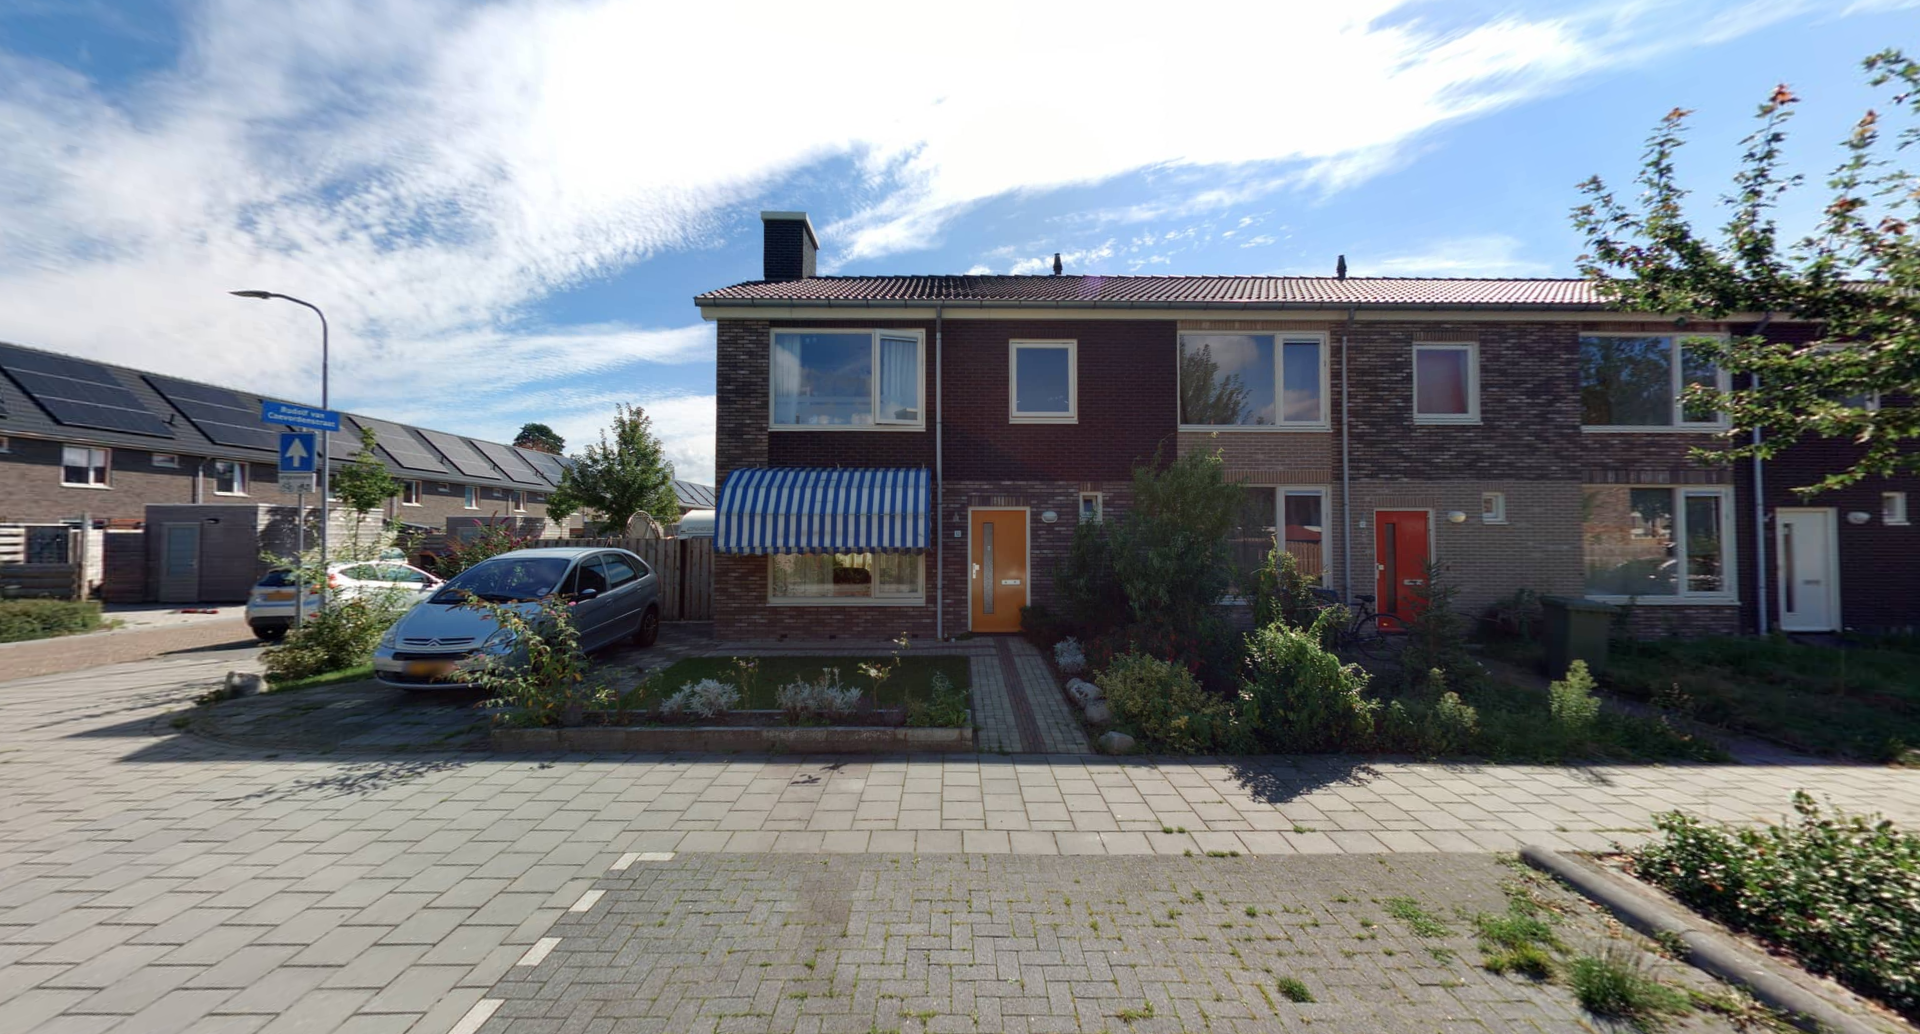 Benthem Reddingiusstraat 12, 9406 JX Assen, Nederland